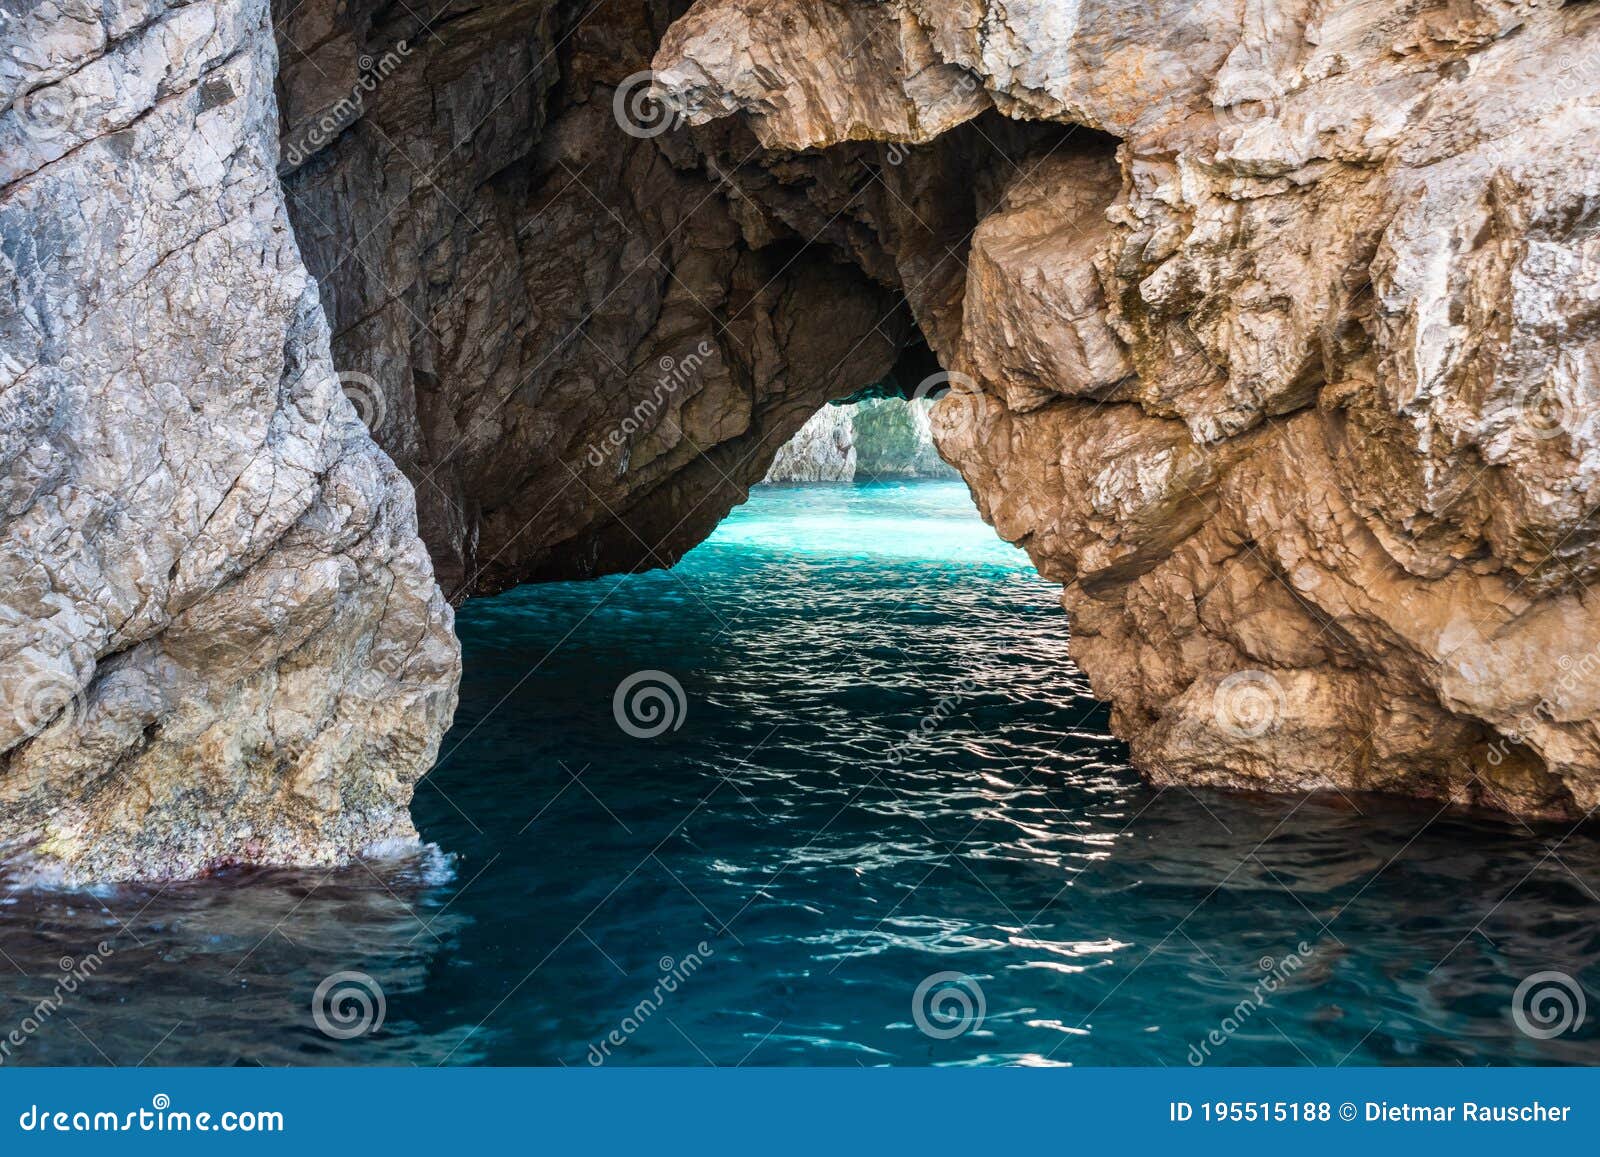 Capri Green Grotto - Sorrento Review